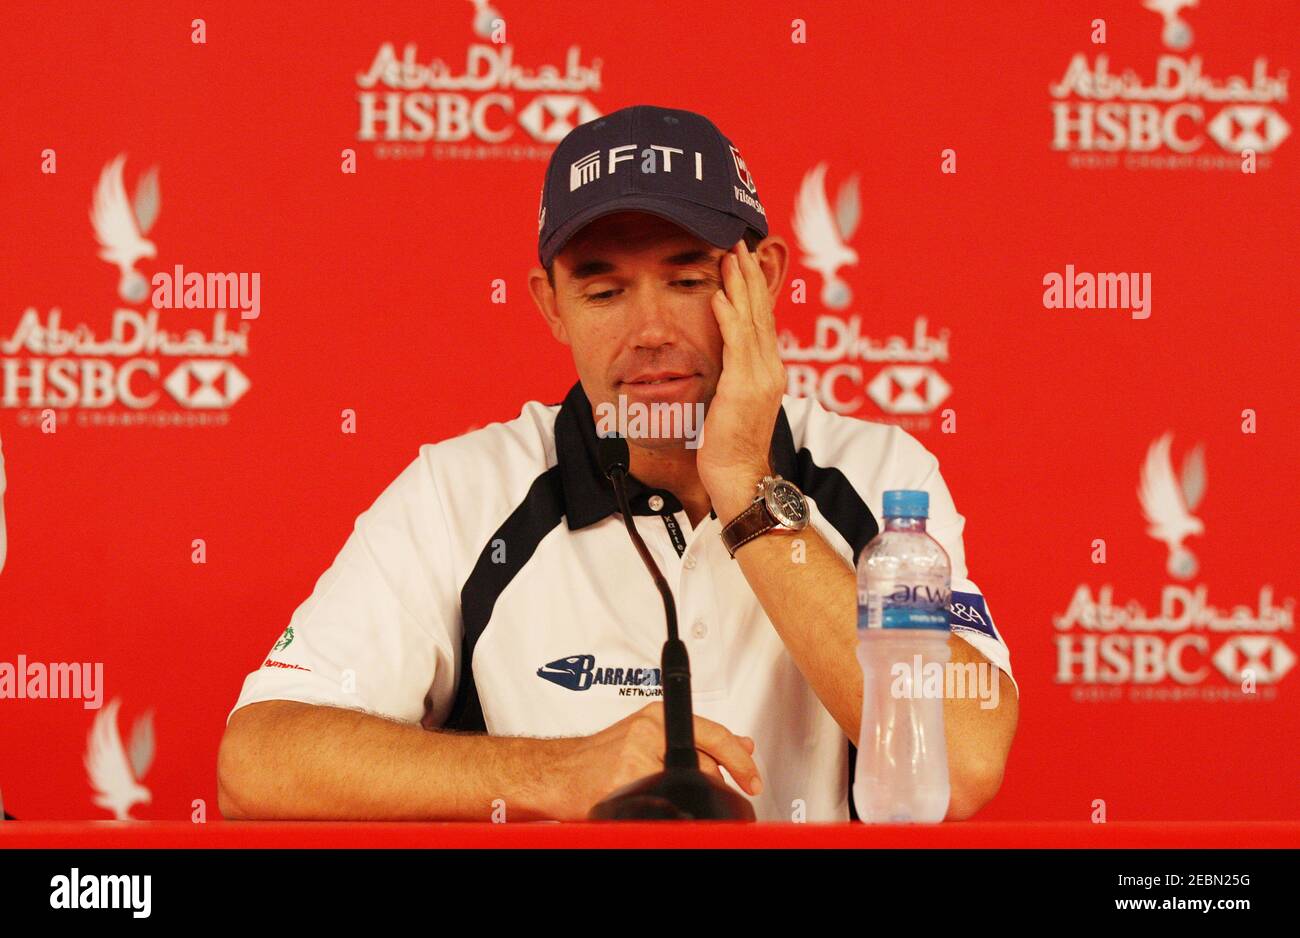 Golf - Abu Dhabi HSBC Golf Championship - Abu Dhabi Golf Club, Abu Dhabi,  United Arab Emirates - 21/1/11 Ireland's Padraig Harrington talks to the  media in a press conference after he